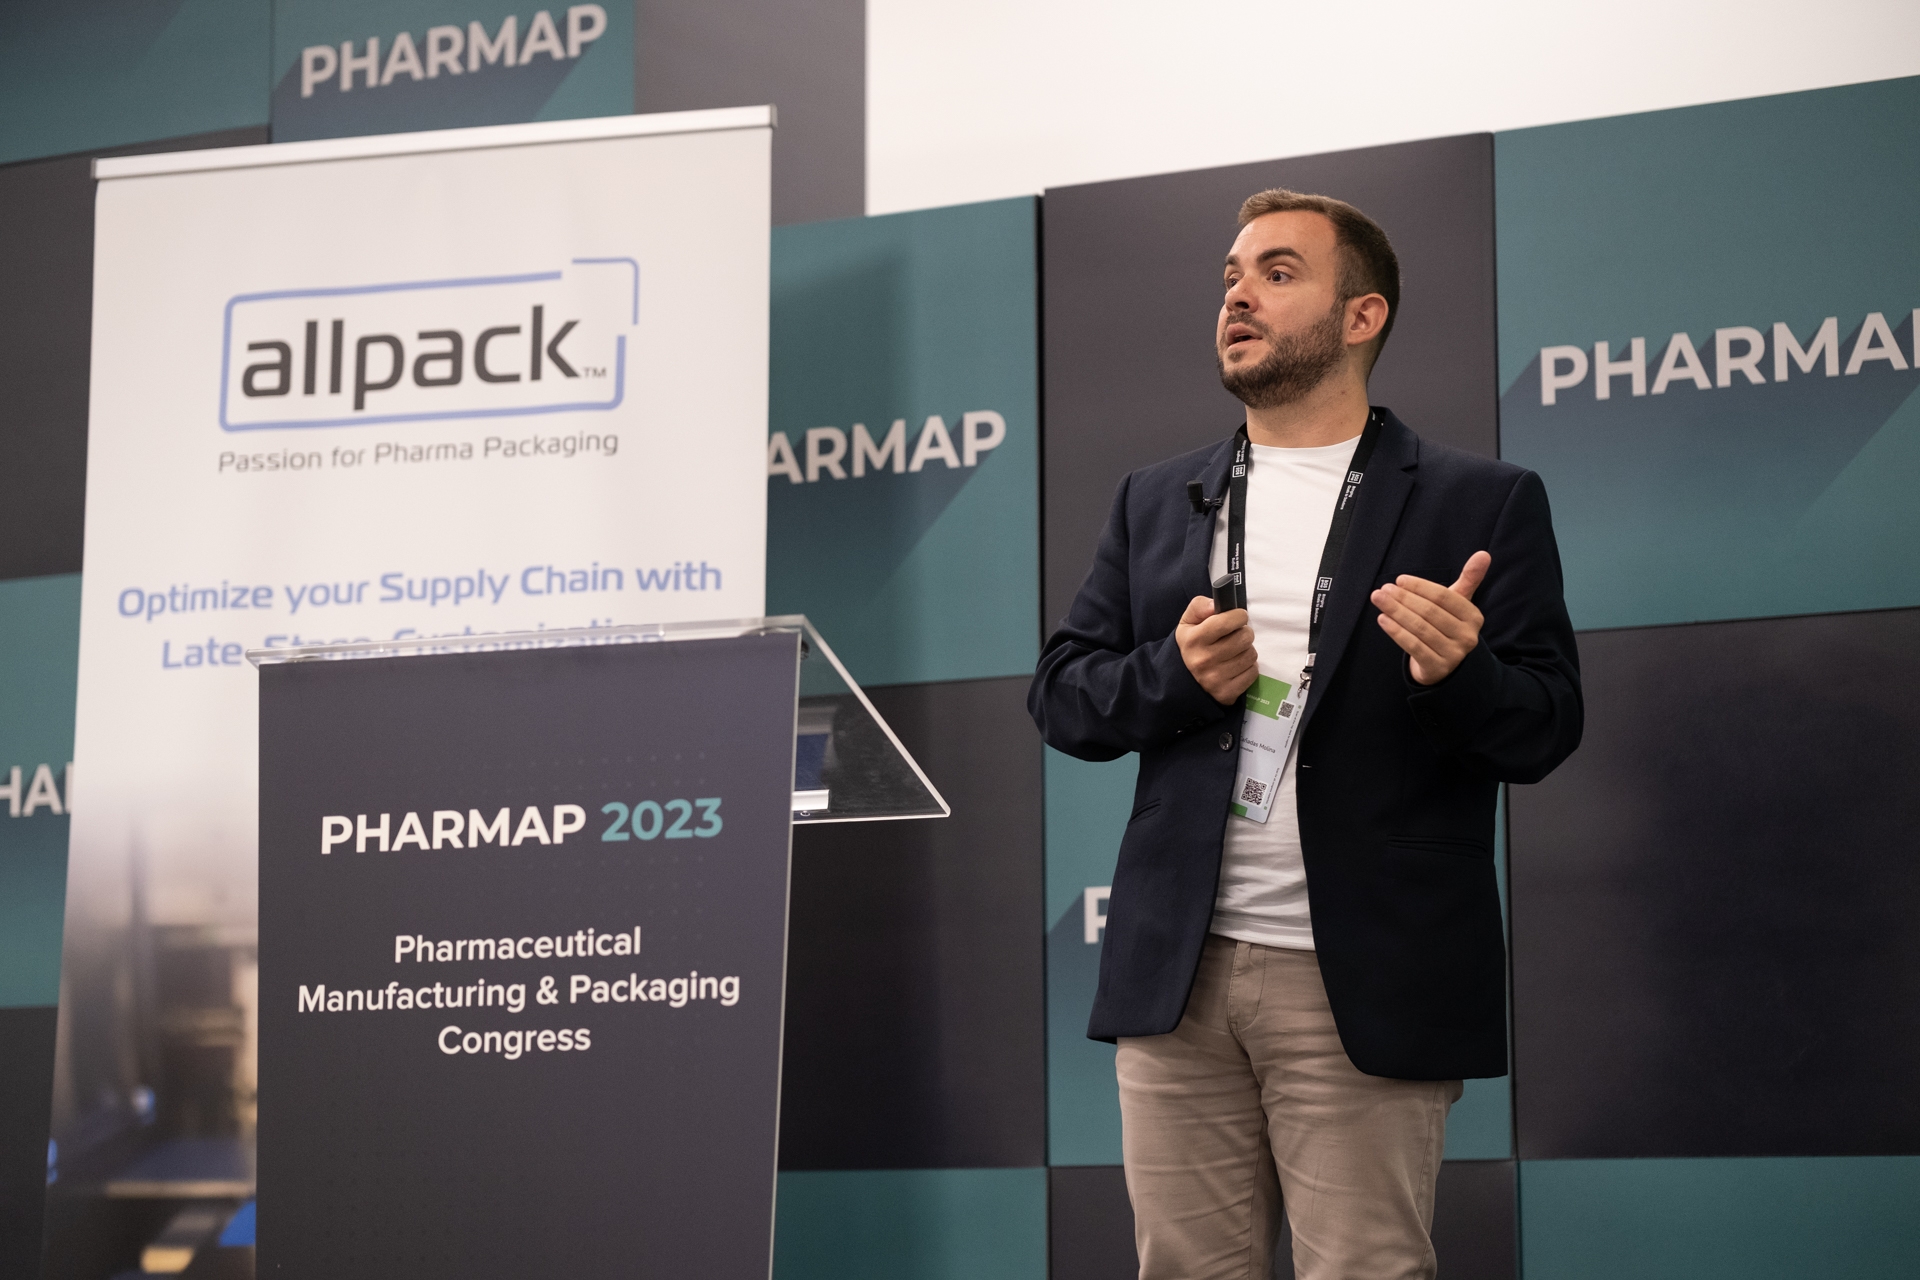 Build the Smarter Future of Pharma World at PHARMAP 2024